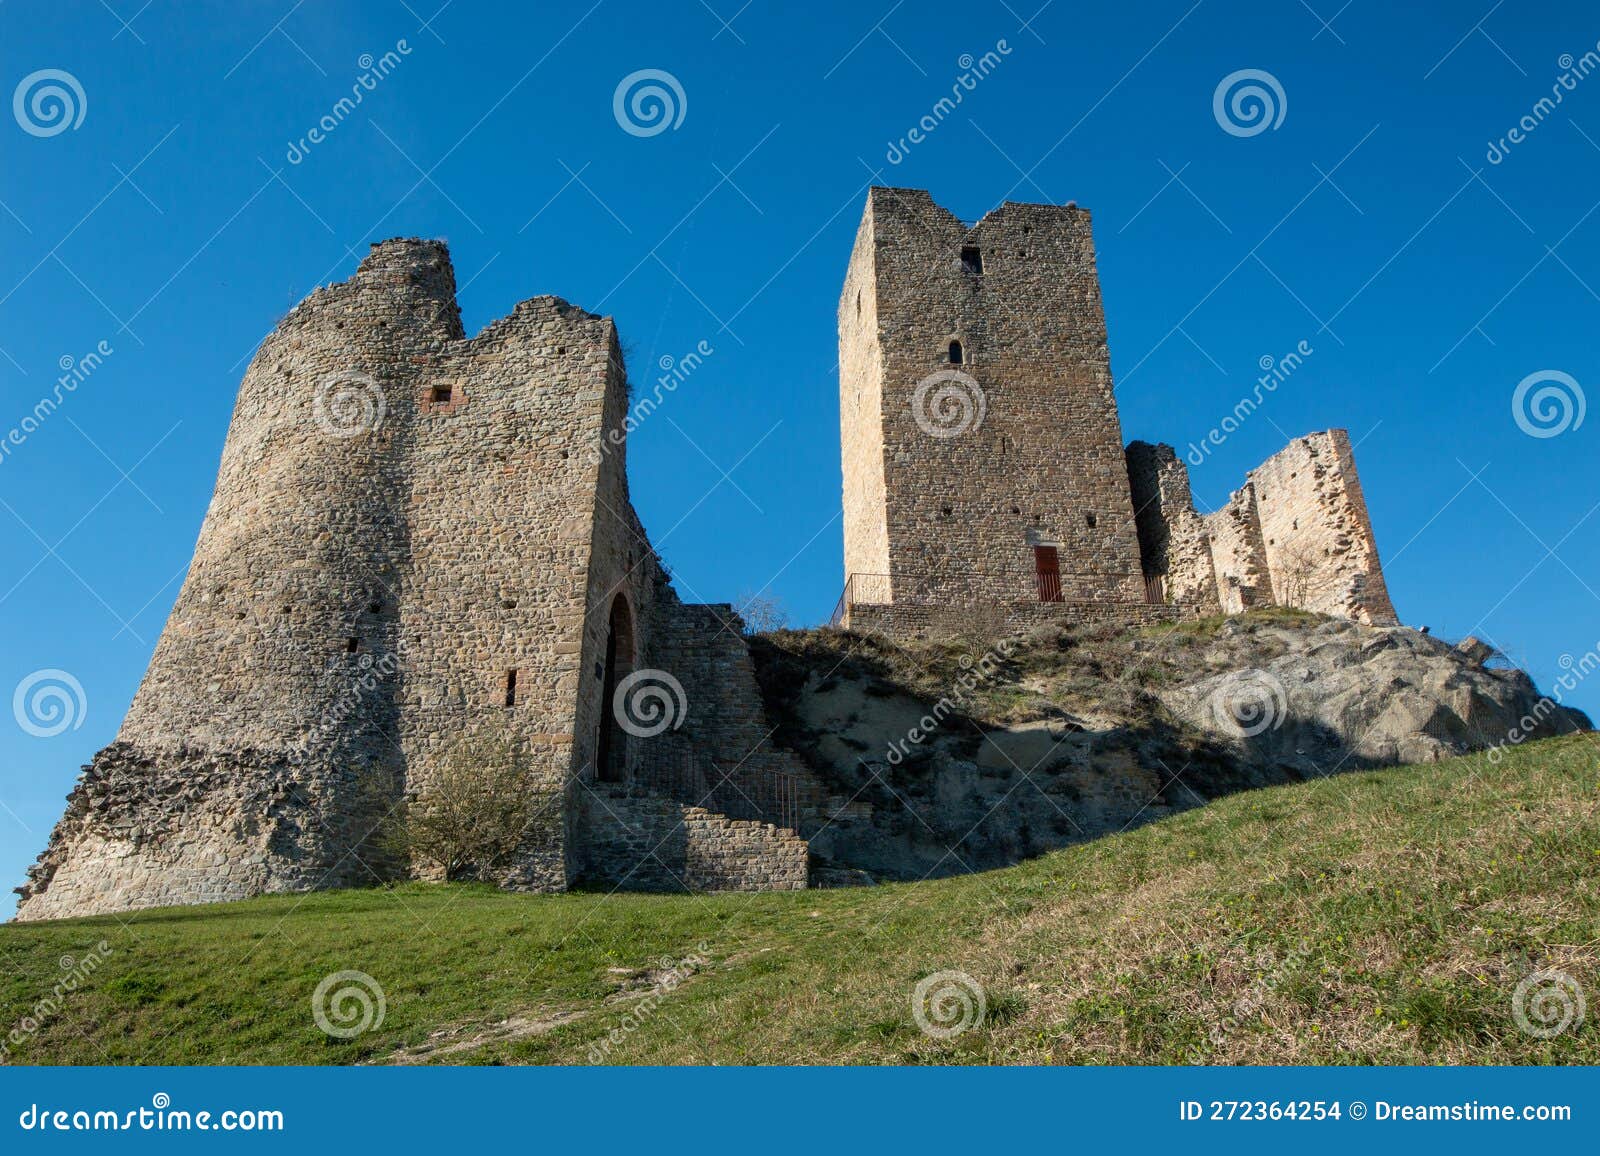 castle of carpineti bismantova stone lands of matilde di canossa tuscan emilian national park